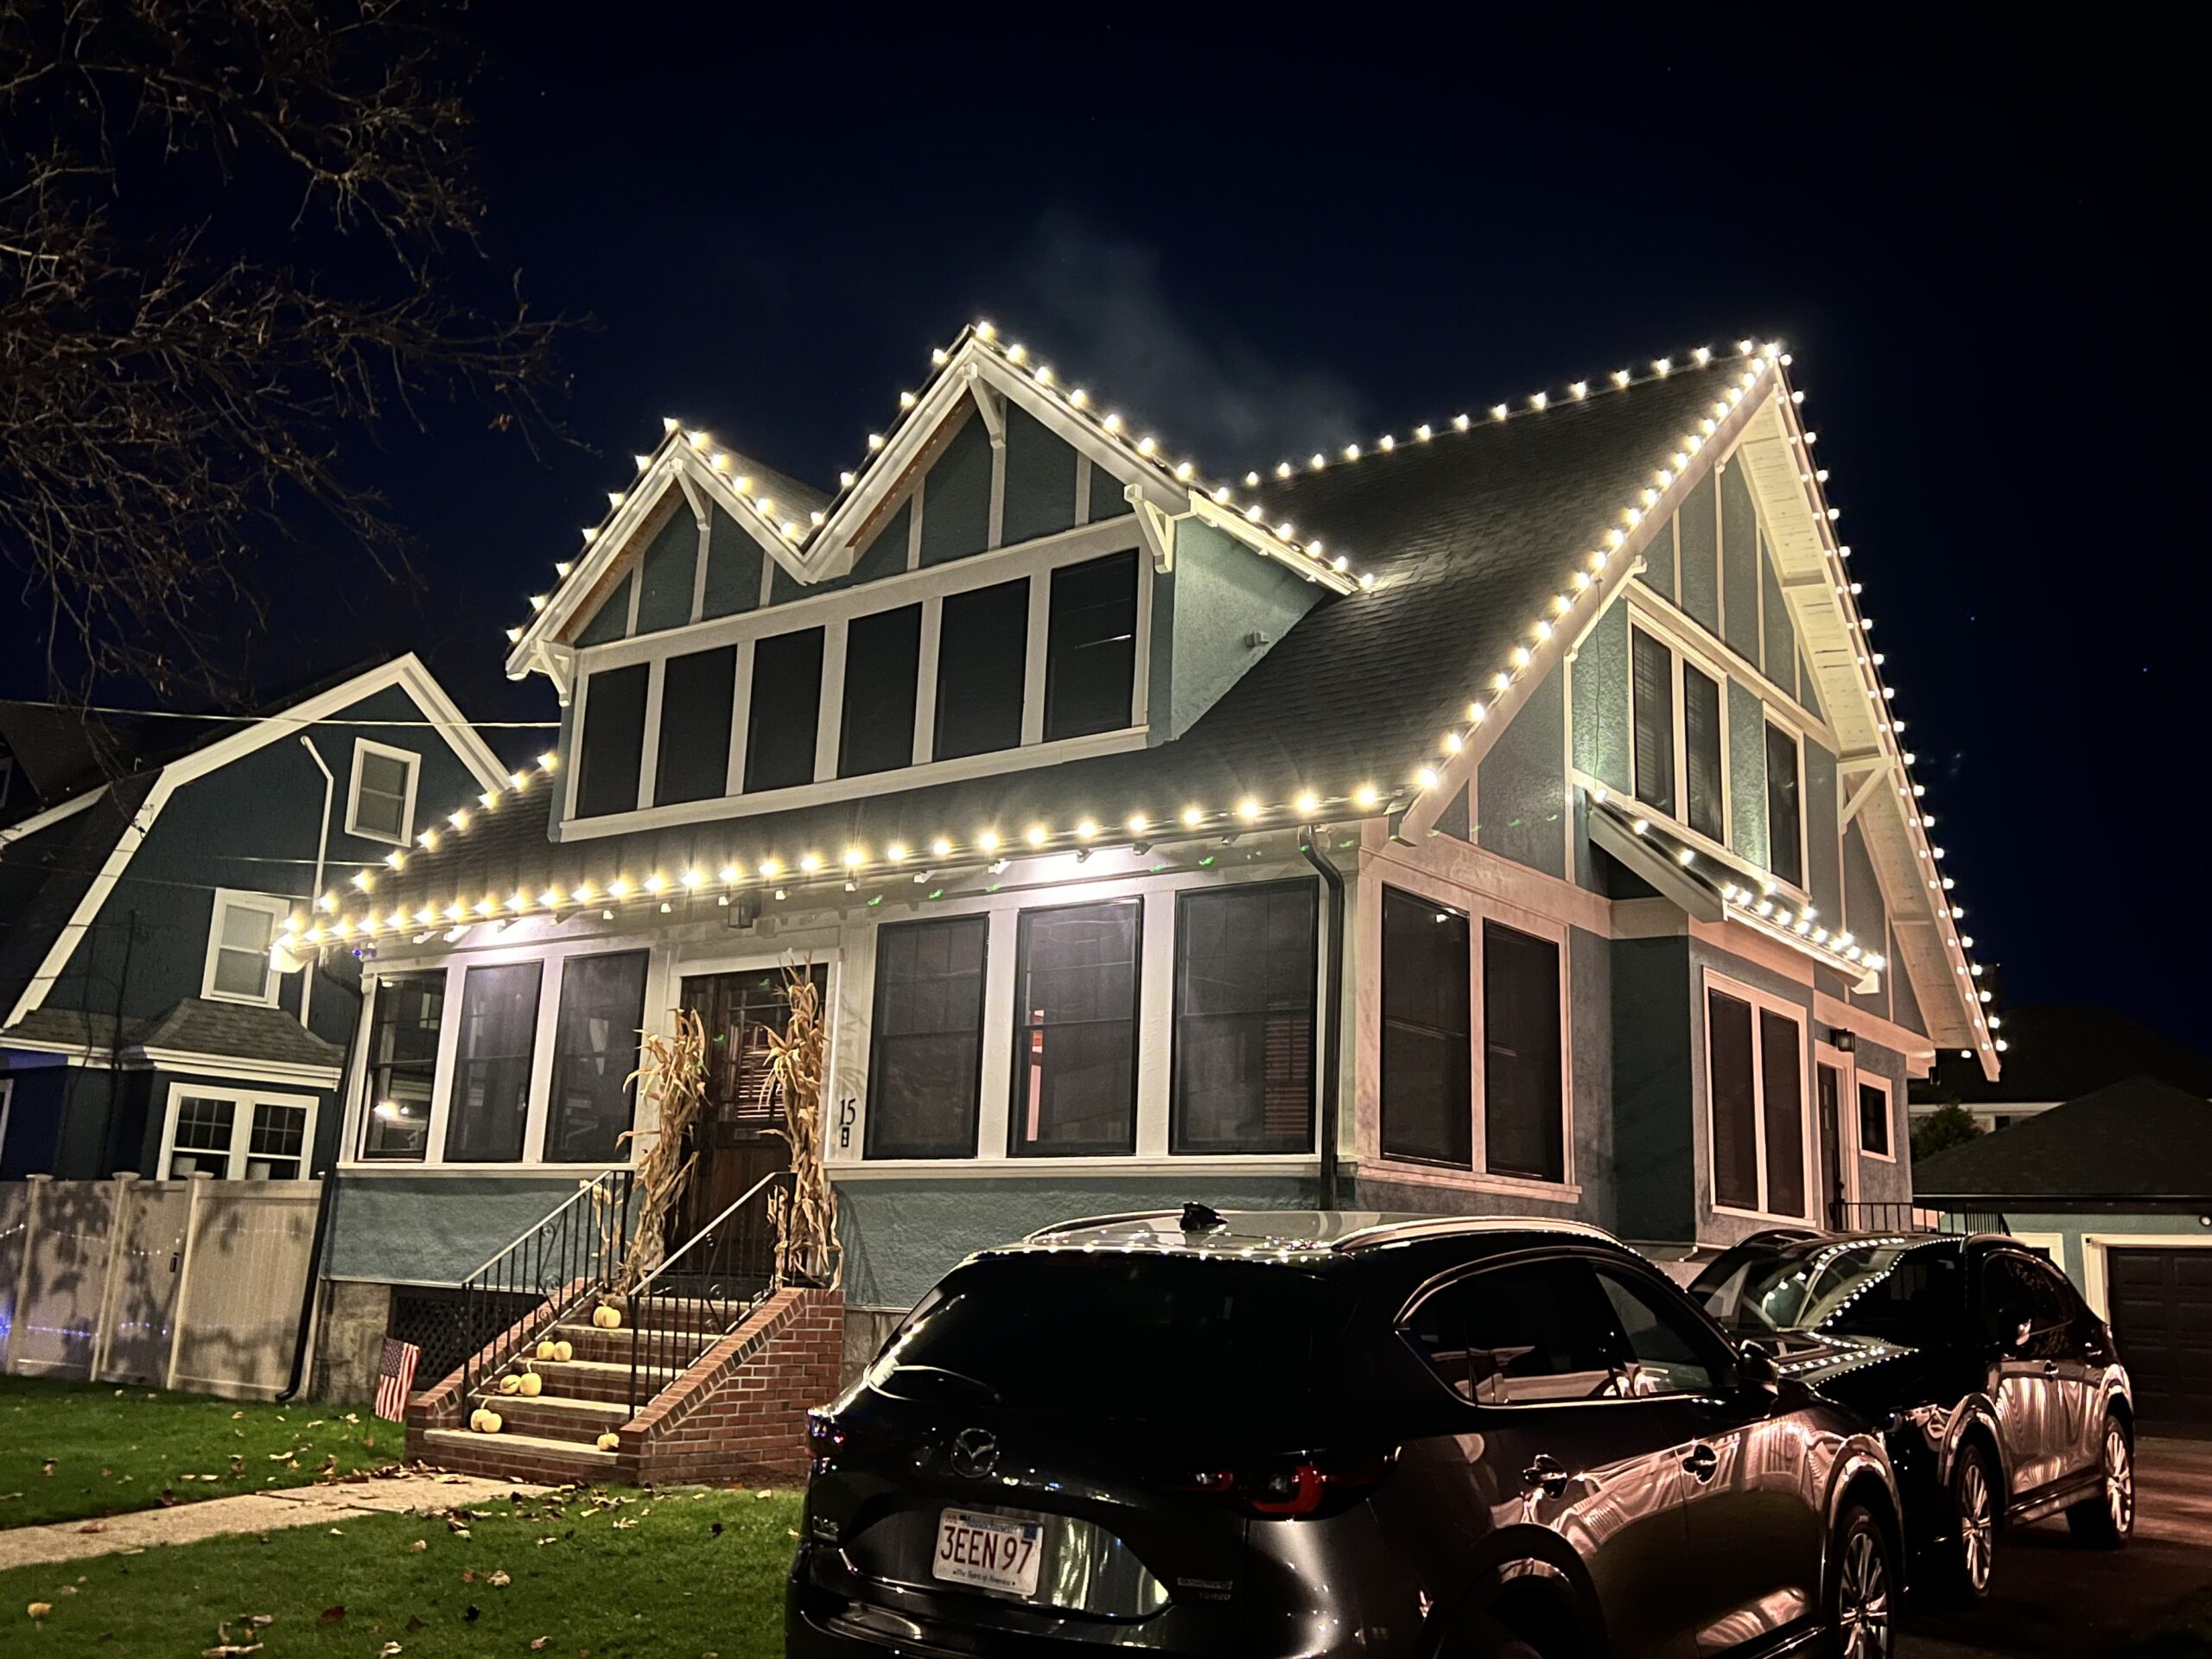 Beautiful Holiday lights on home